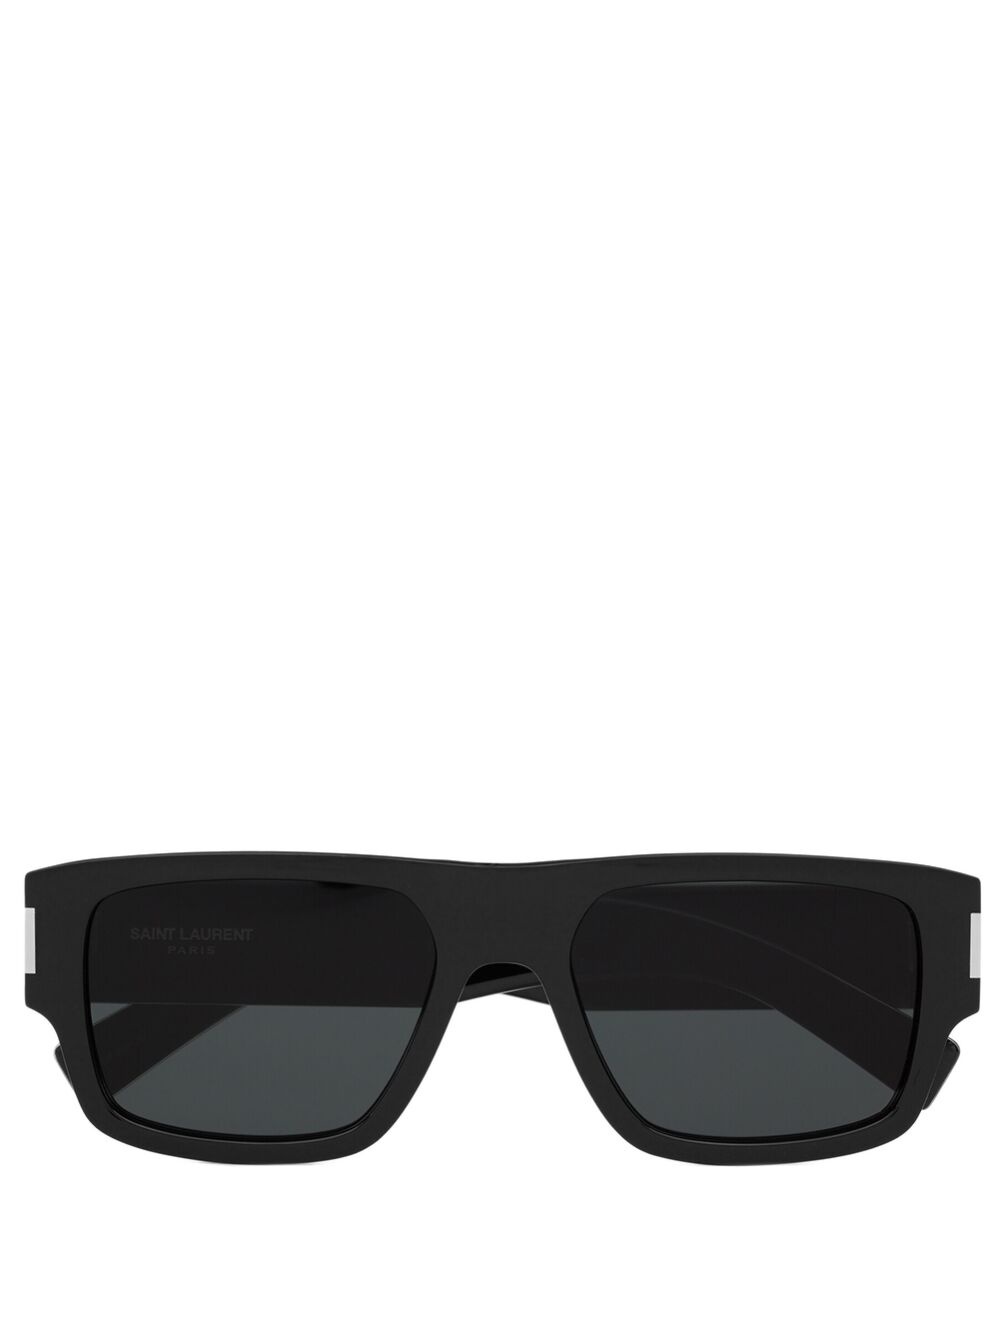 Sl 659 sunglasses - 1